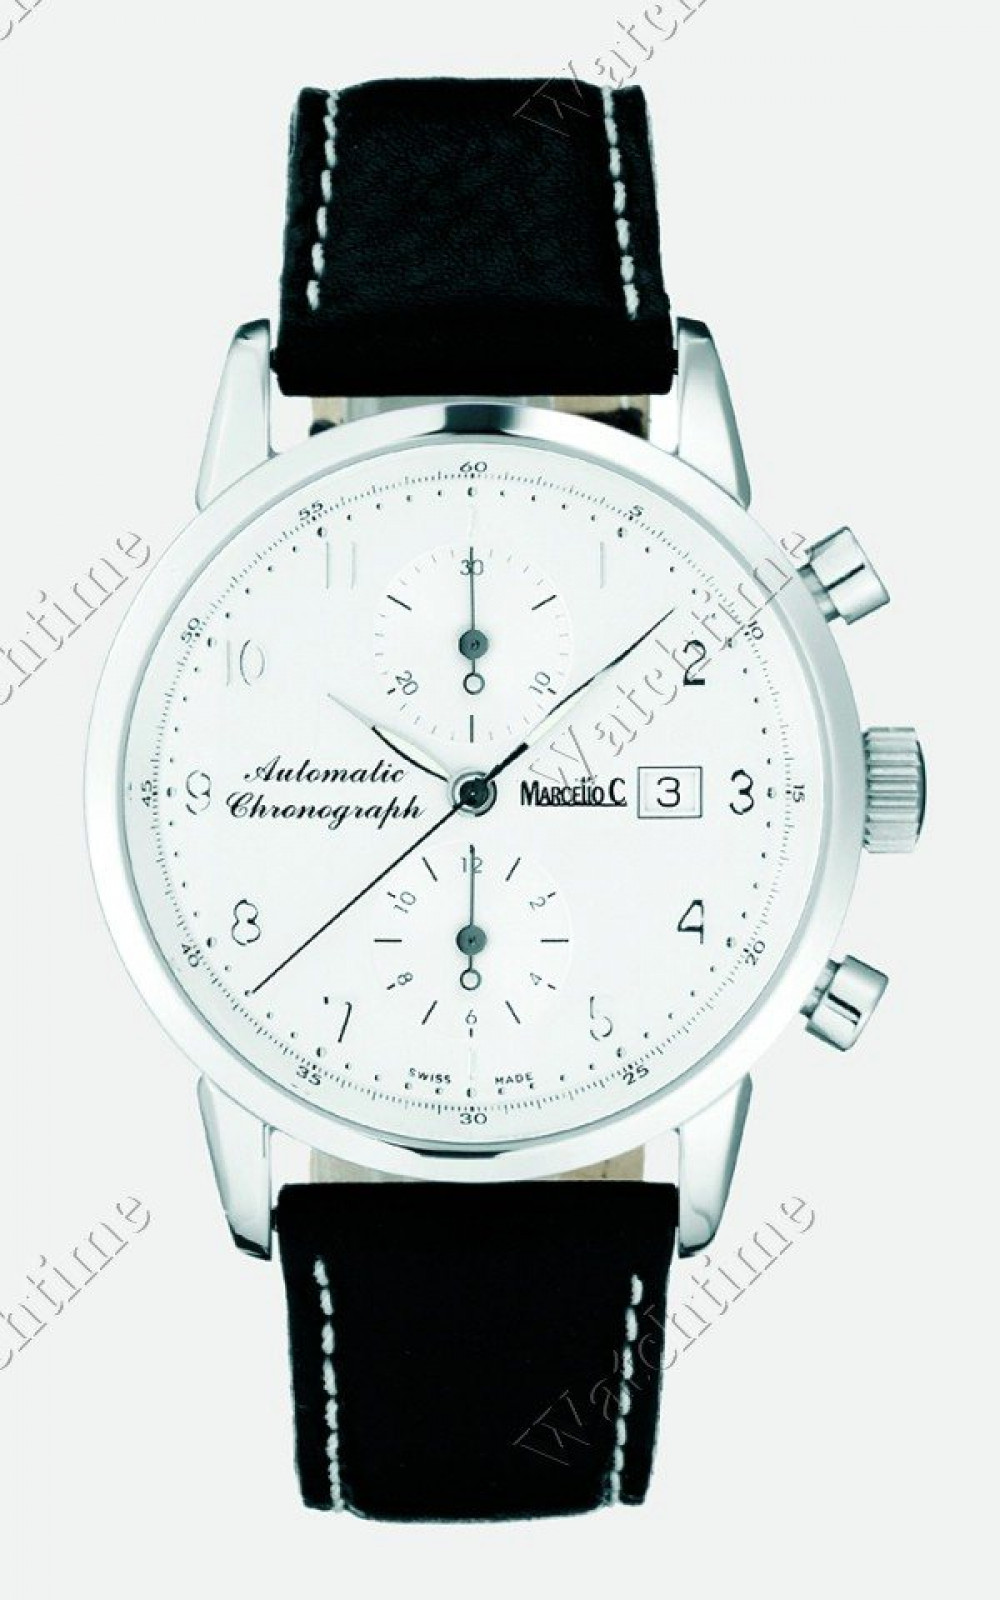 Zegarek firmy Marcello C., model Chronograph